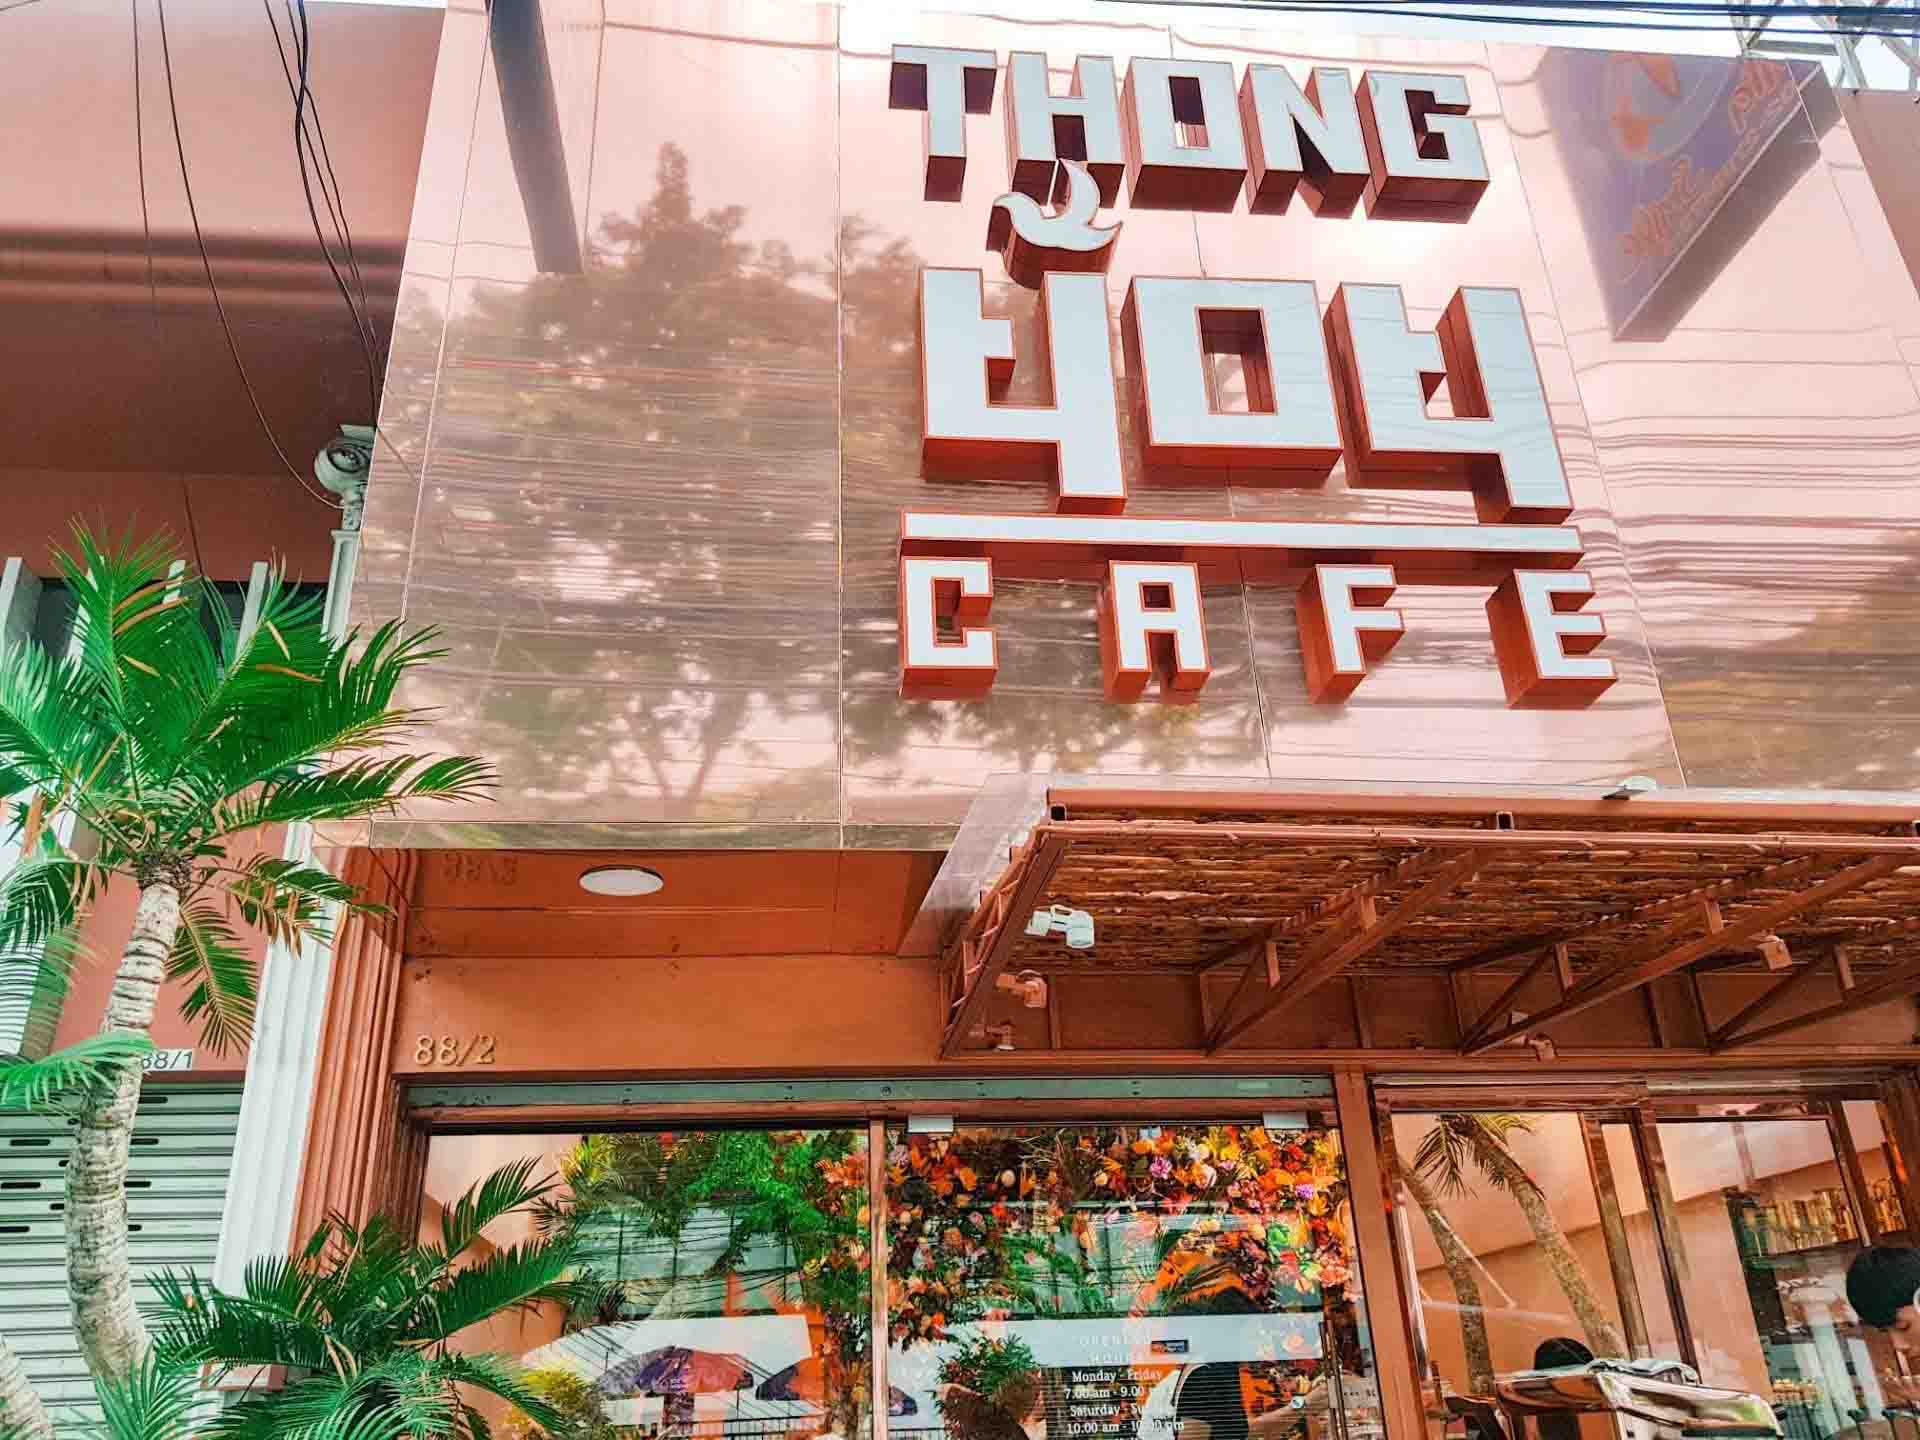 Thong Yoy Cafe